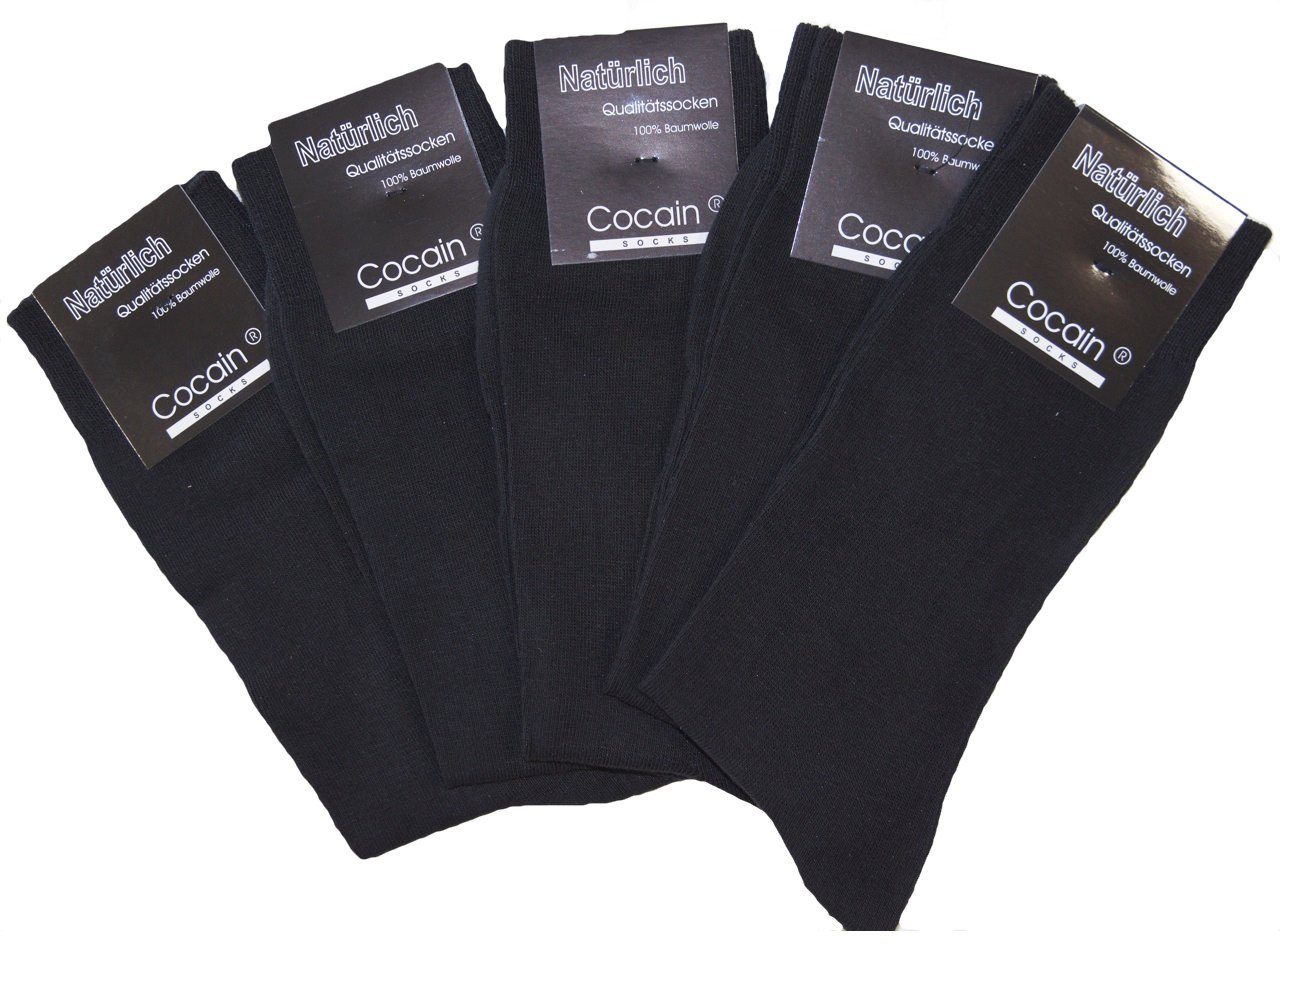 Cocain underwear Businesssocken »Klassische schwarze Herren Damen Socken«  (10-Paar) handgekettelte Spitze online kaufen | OTTO